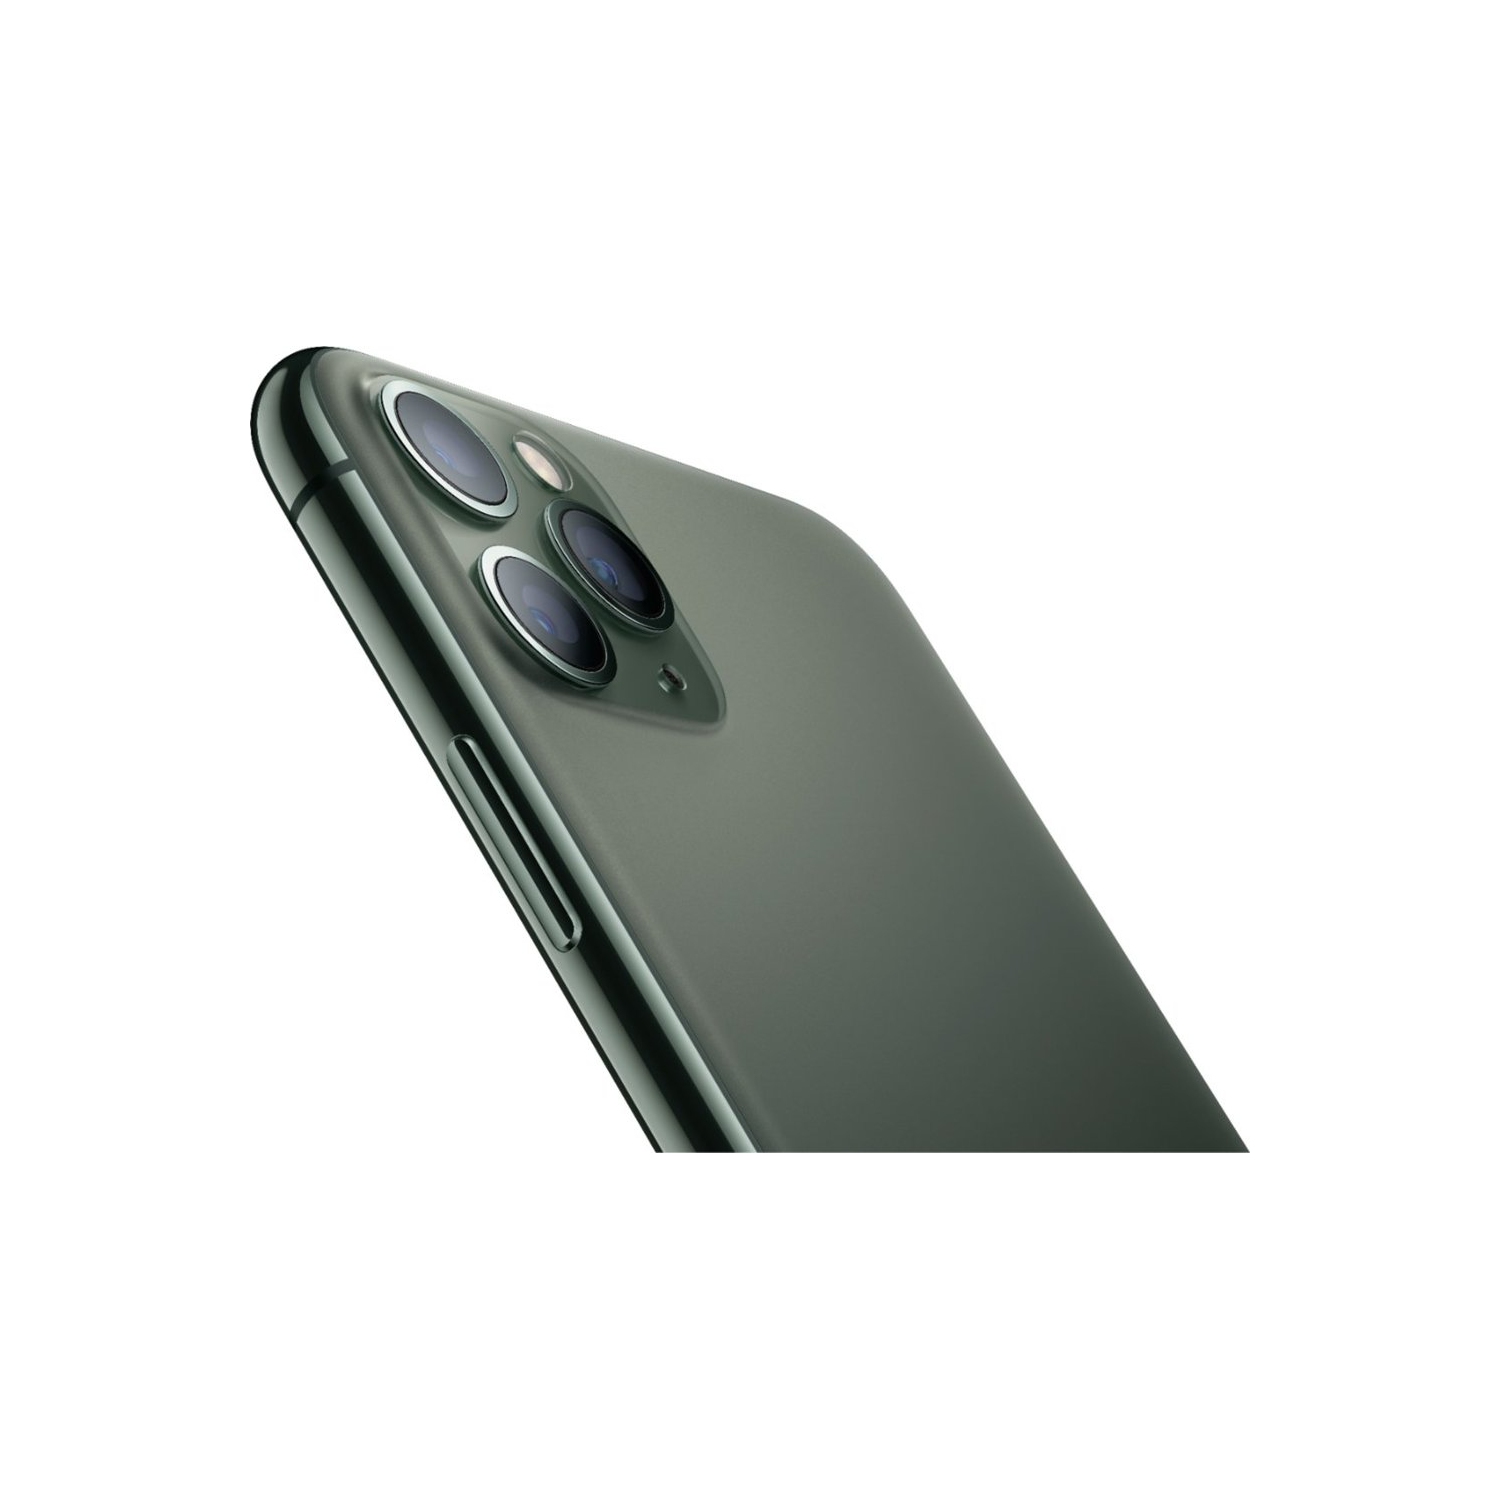 Apple iPhone 11 Pro Max 256GB Smartphone - Midnight Green 